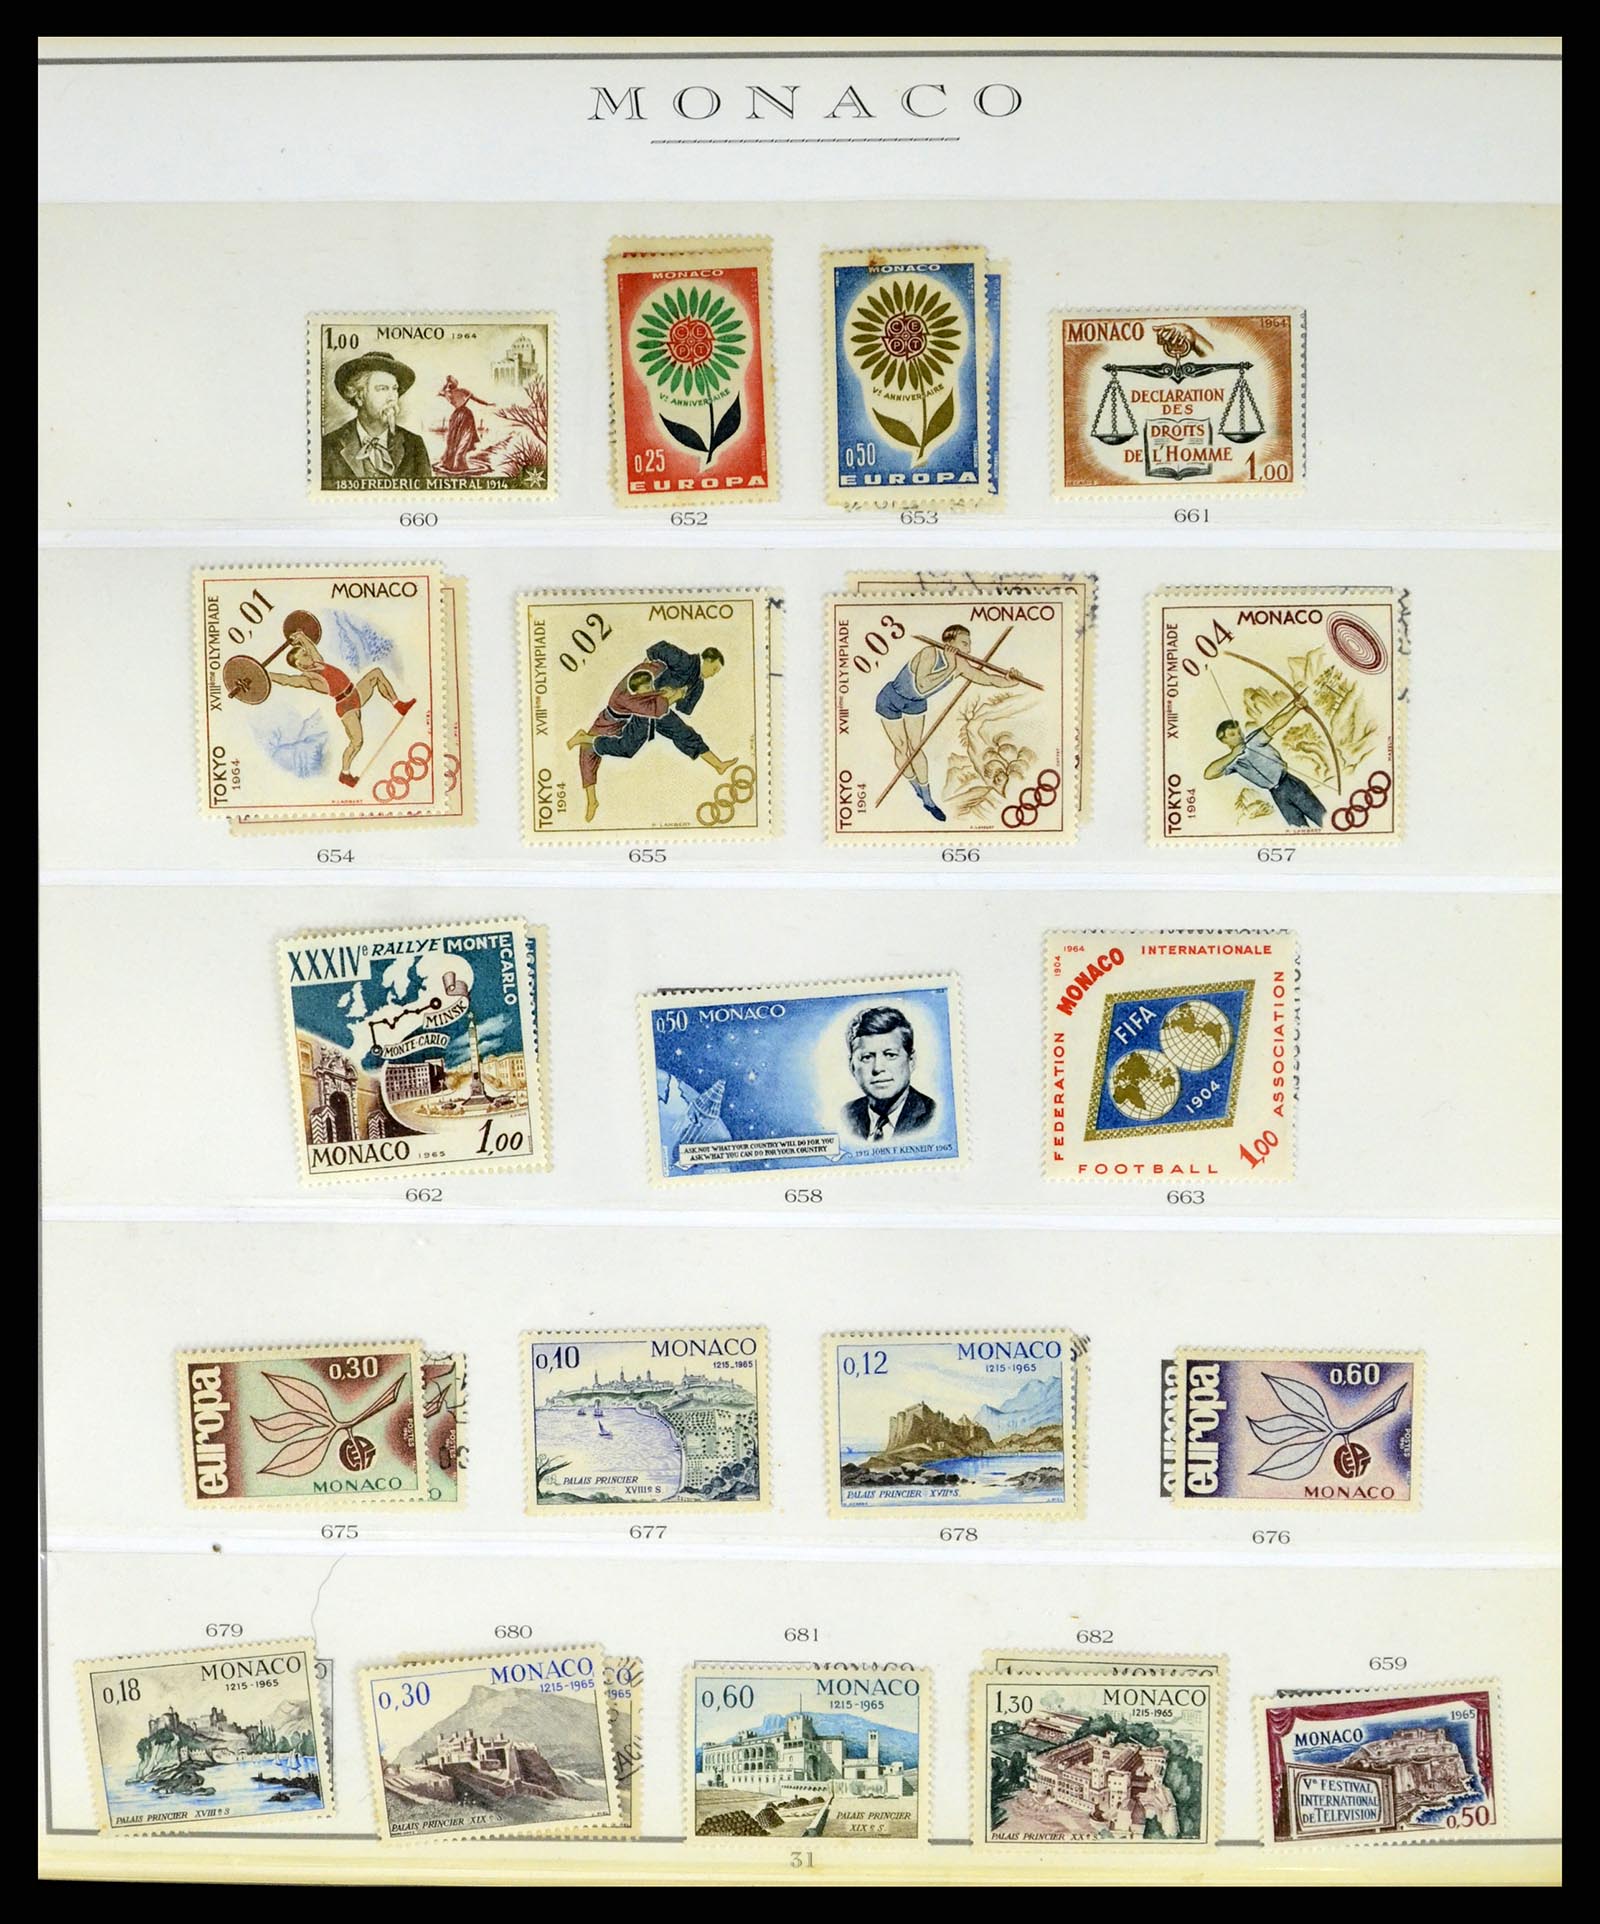 37437 059 - Stamp collection 37437 Monaco 1885-1996.